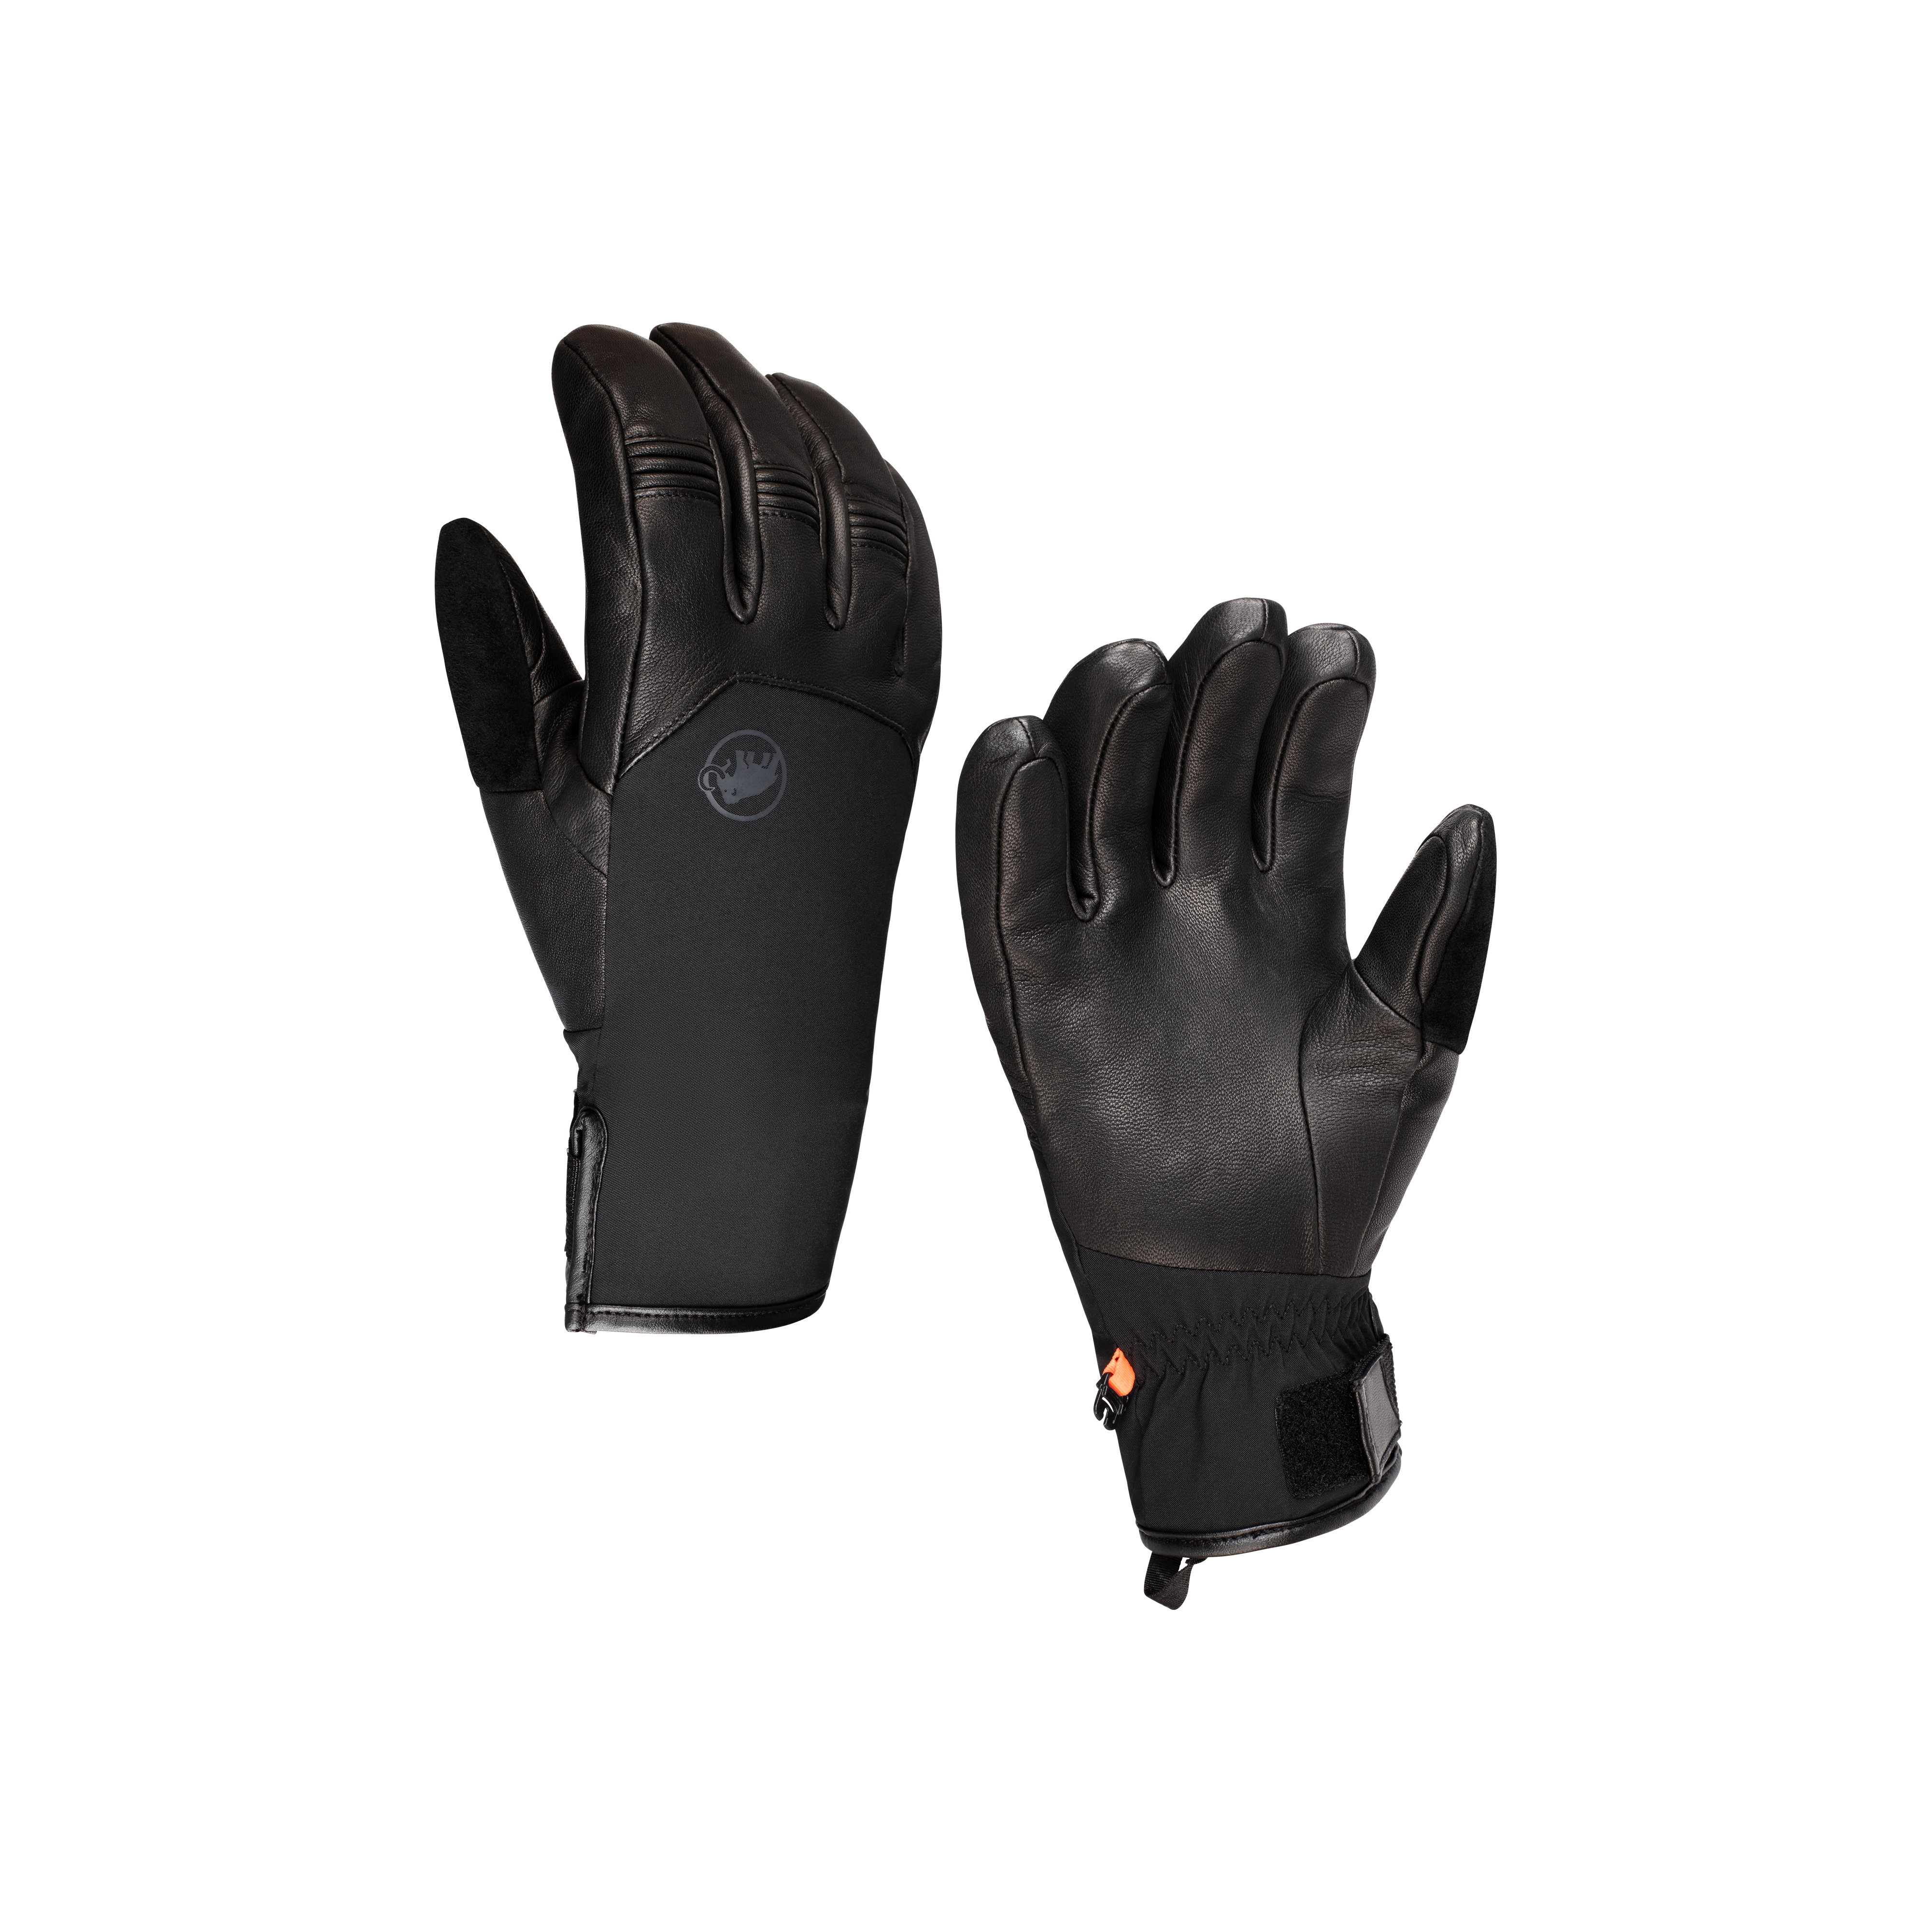 Stoney Glove - black, 6 thumbnail